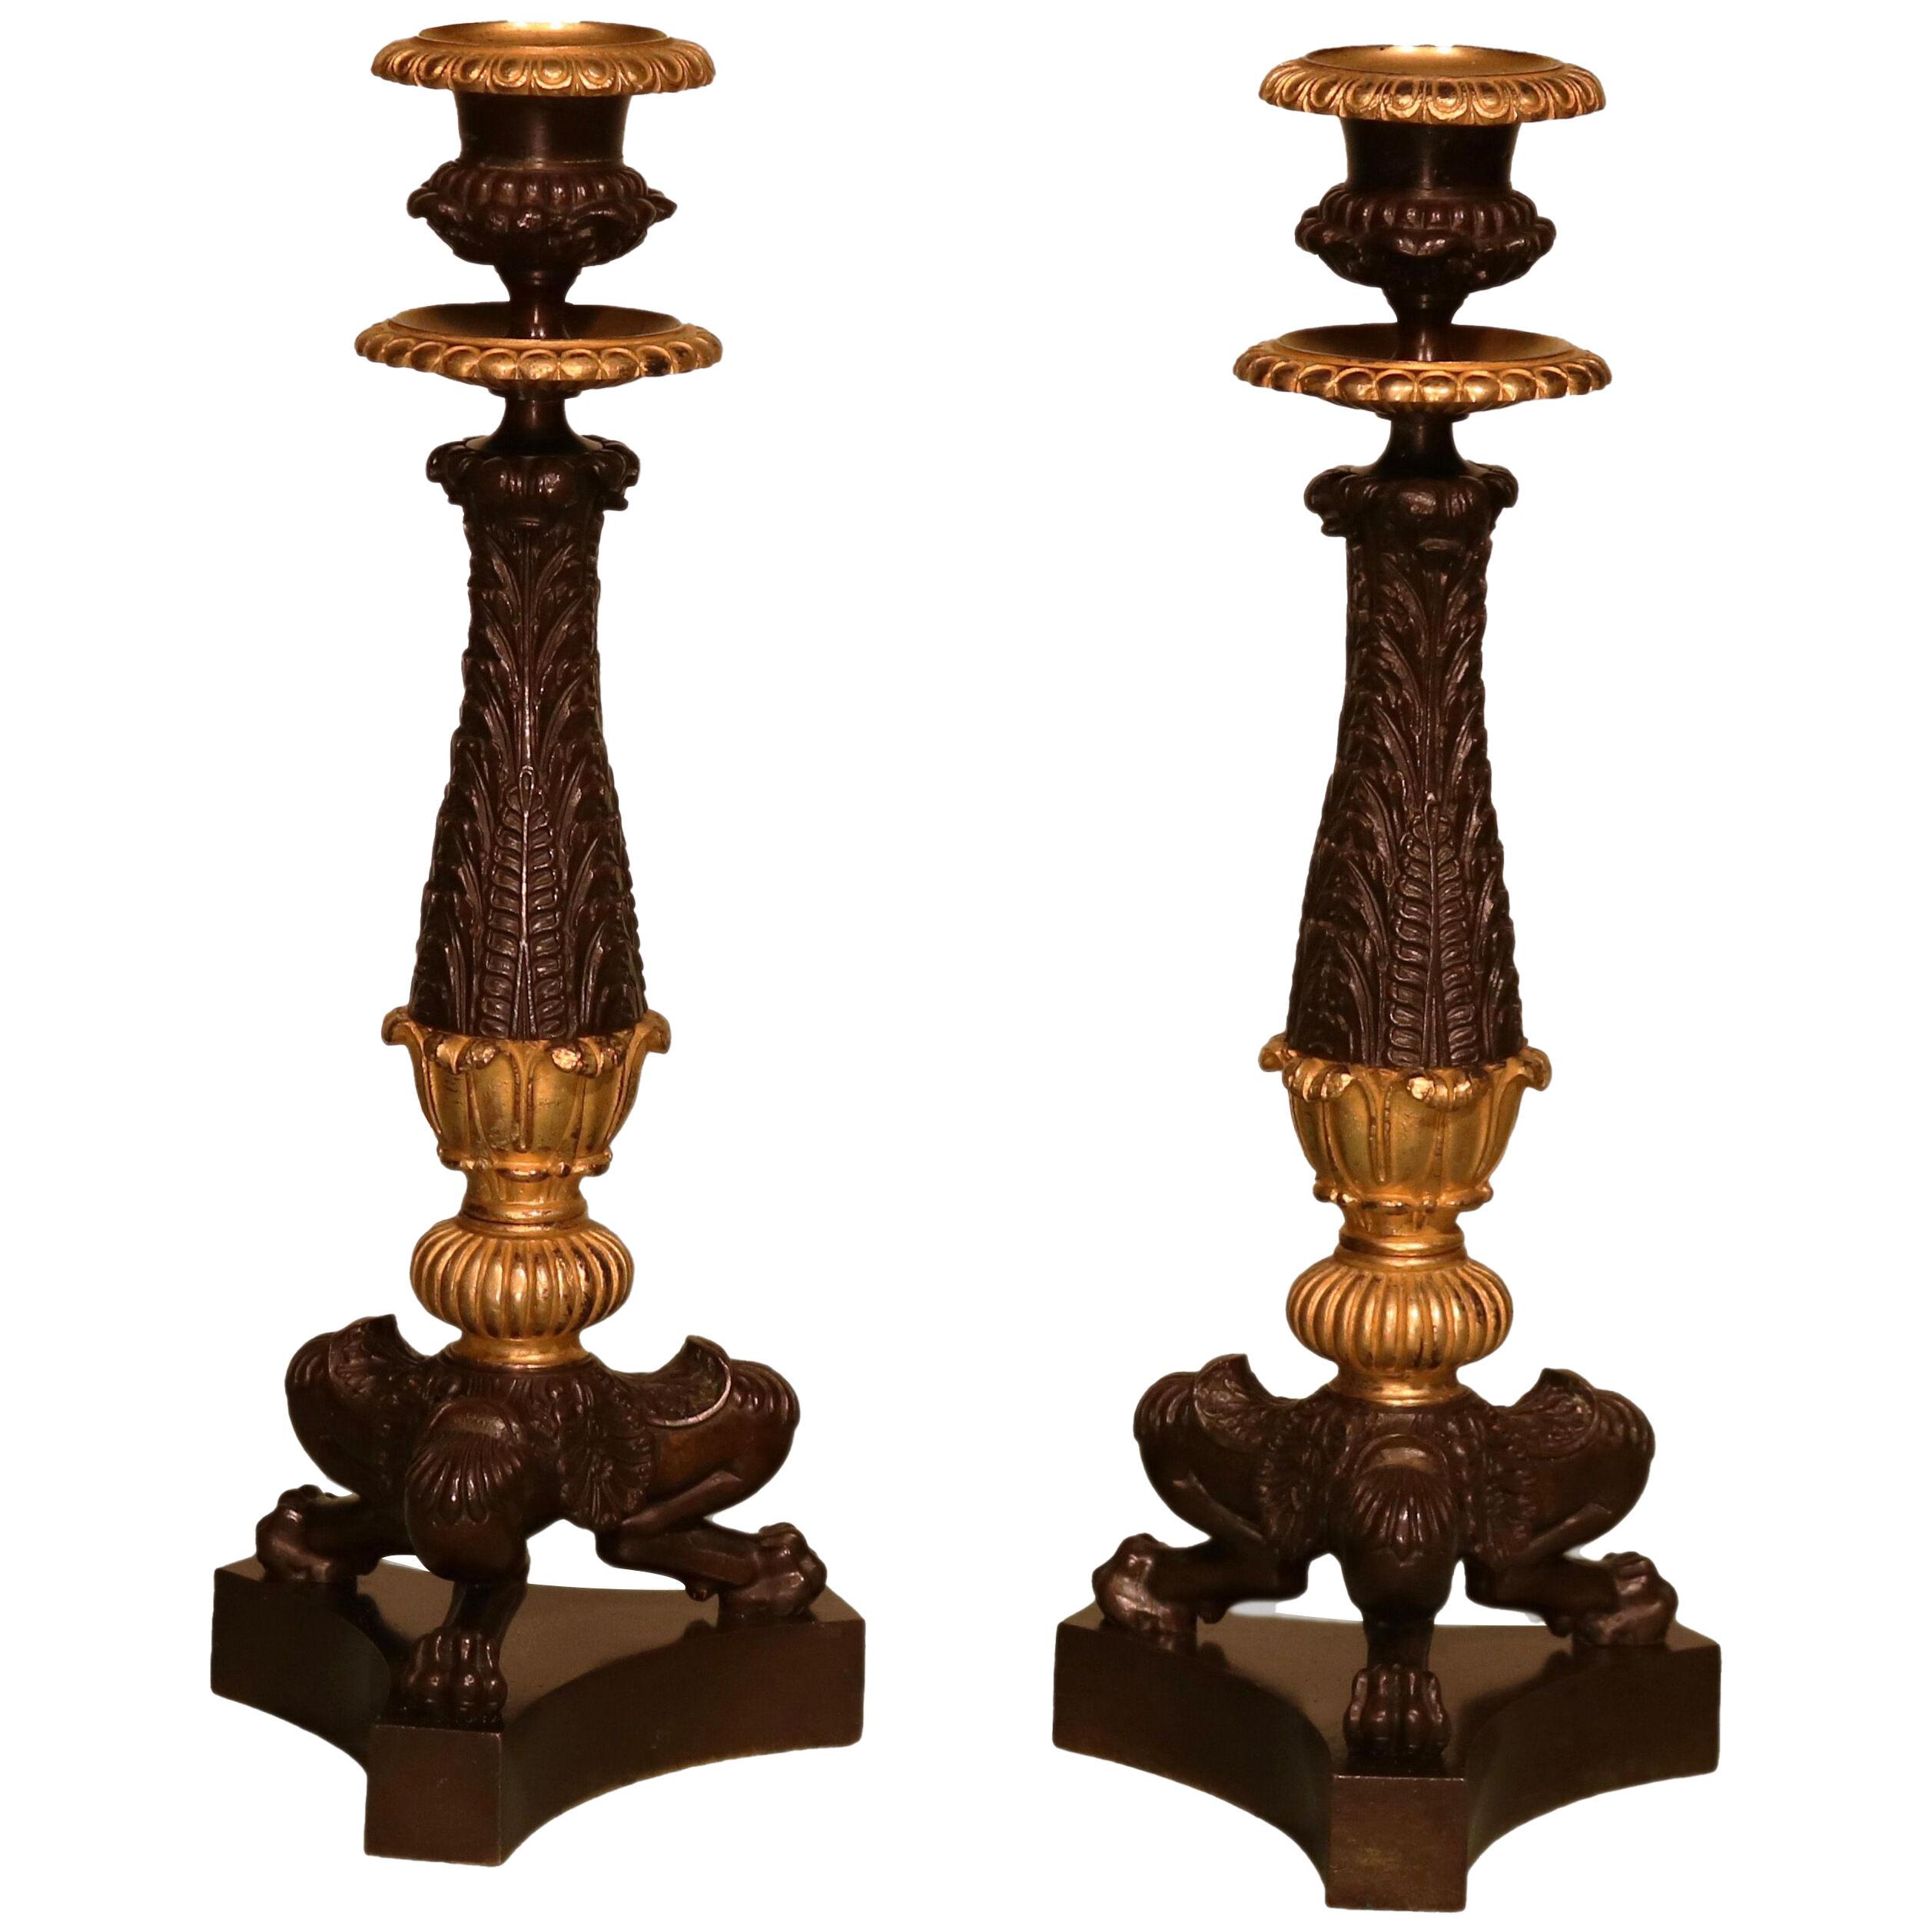 A pair of 19th century Regency period bronze and ormolu candlesticks